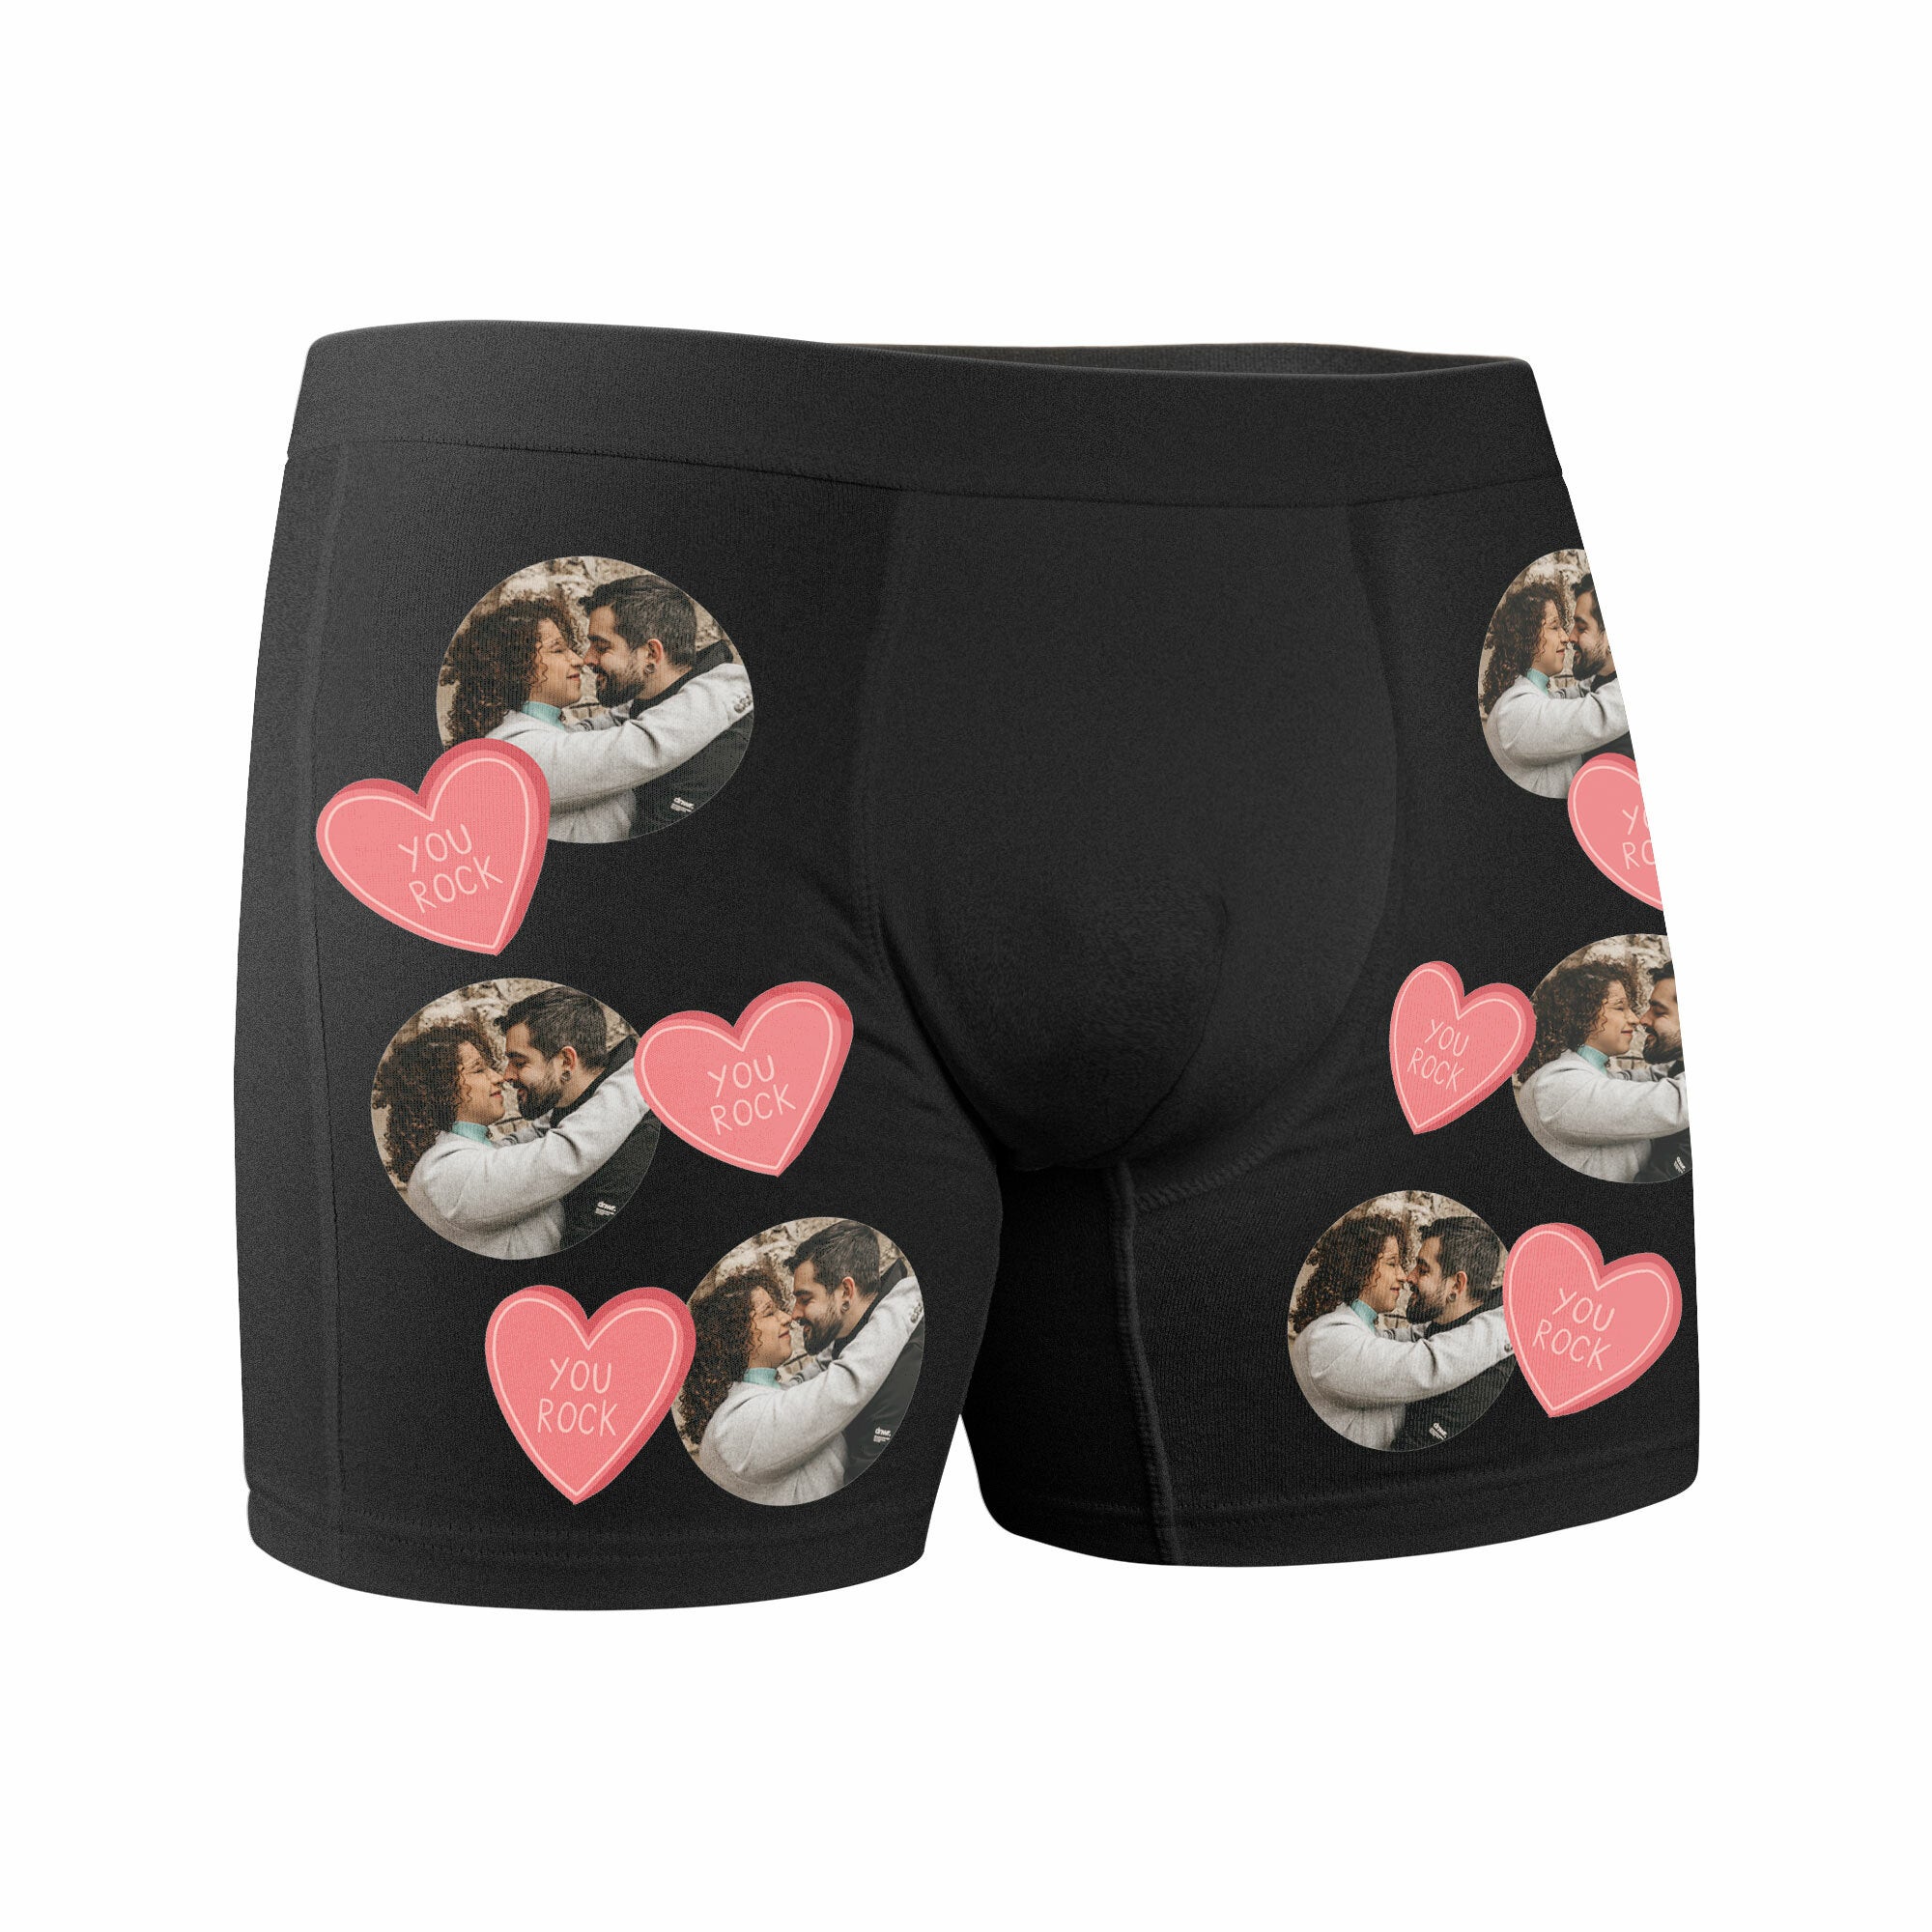 Personalised boxer shorts - L - Black